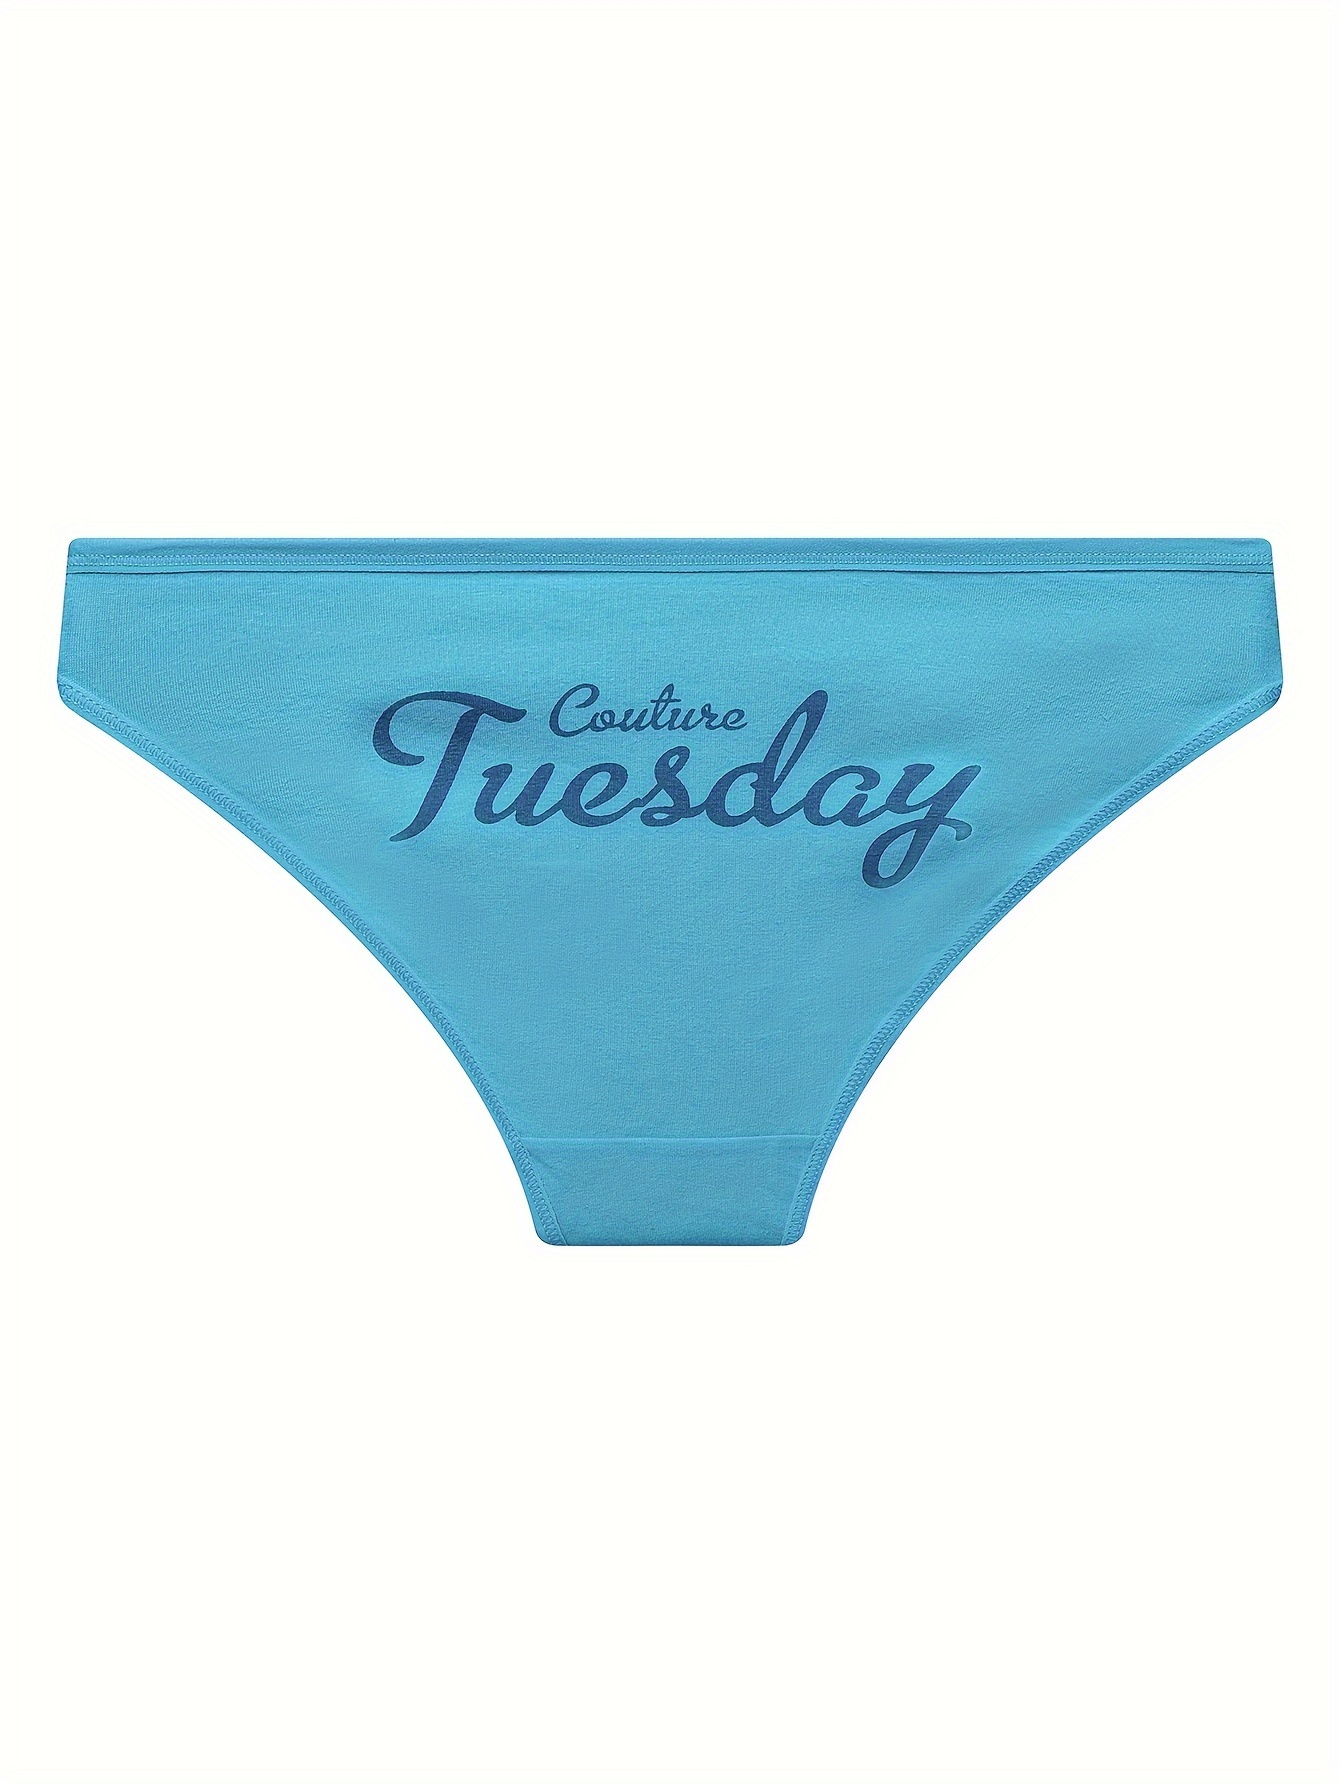 7 Pcs/lots Women Underwear Days Of The Week G-string Panties